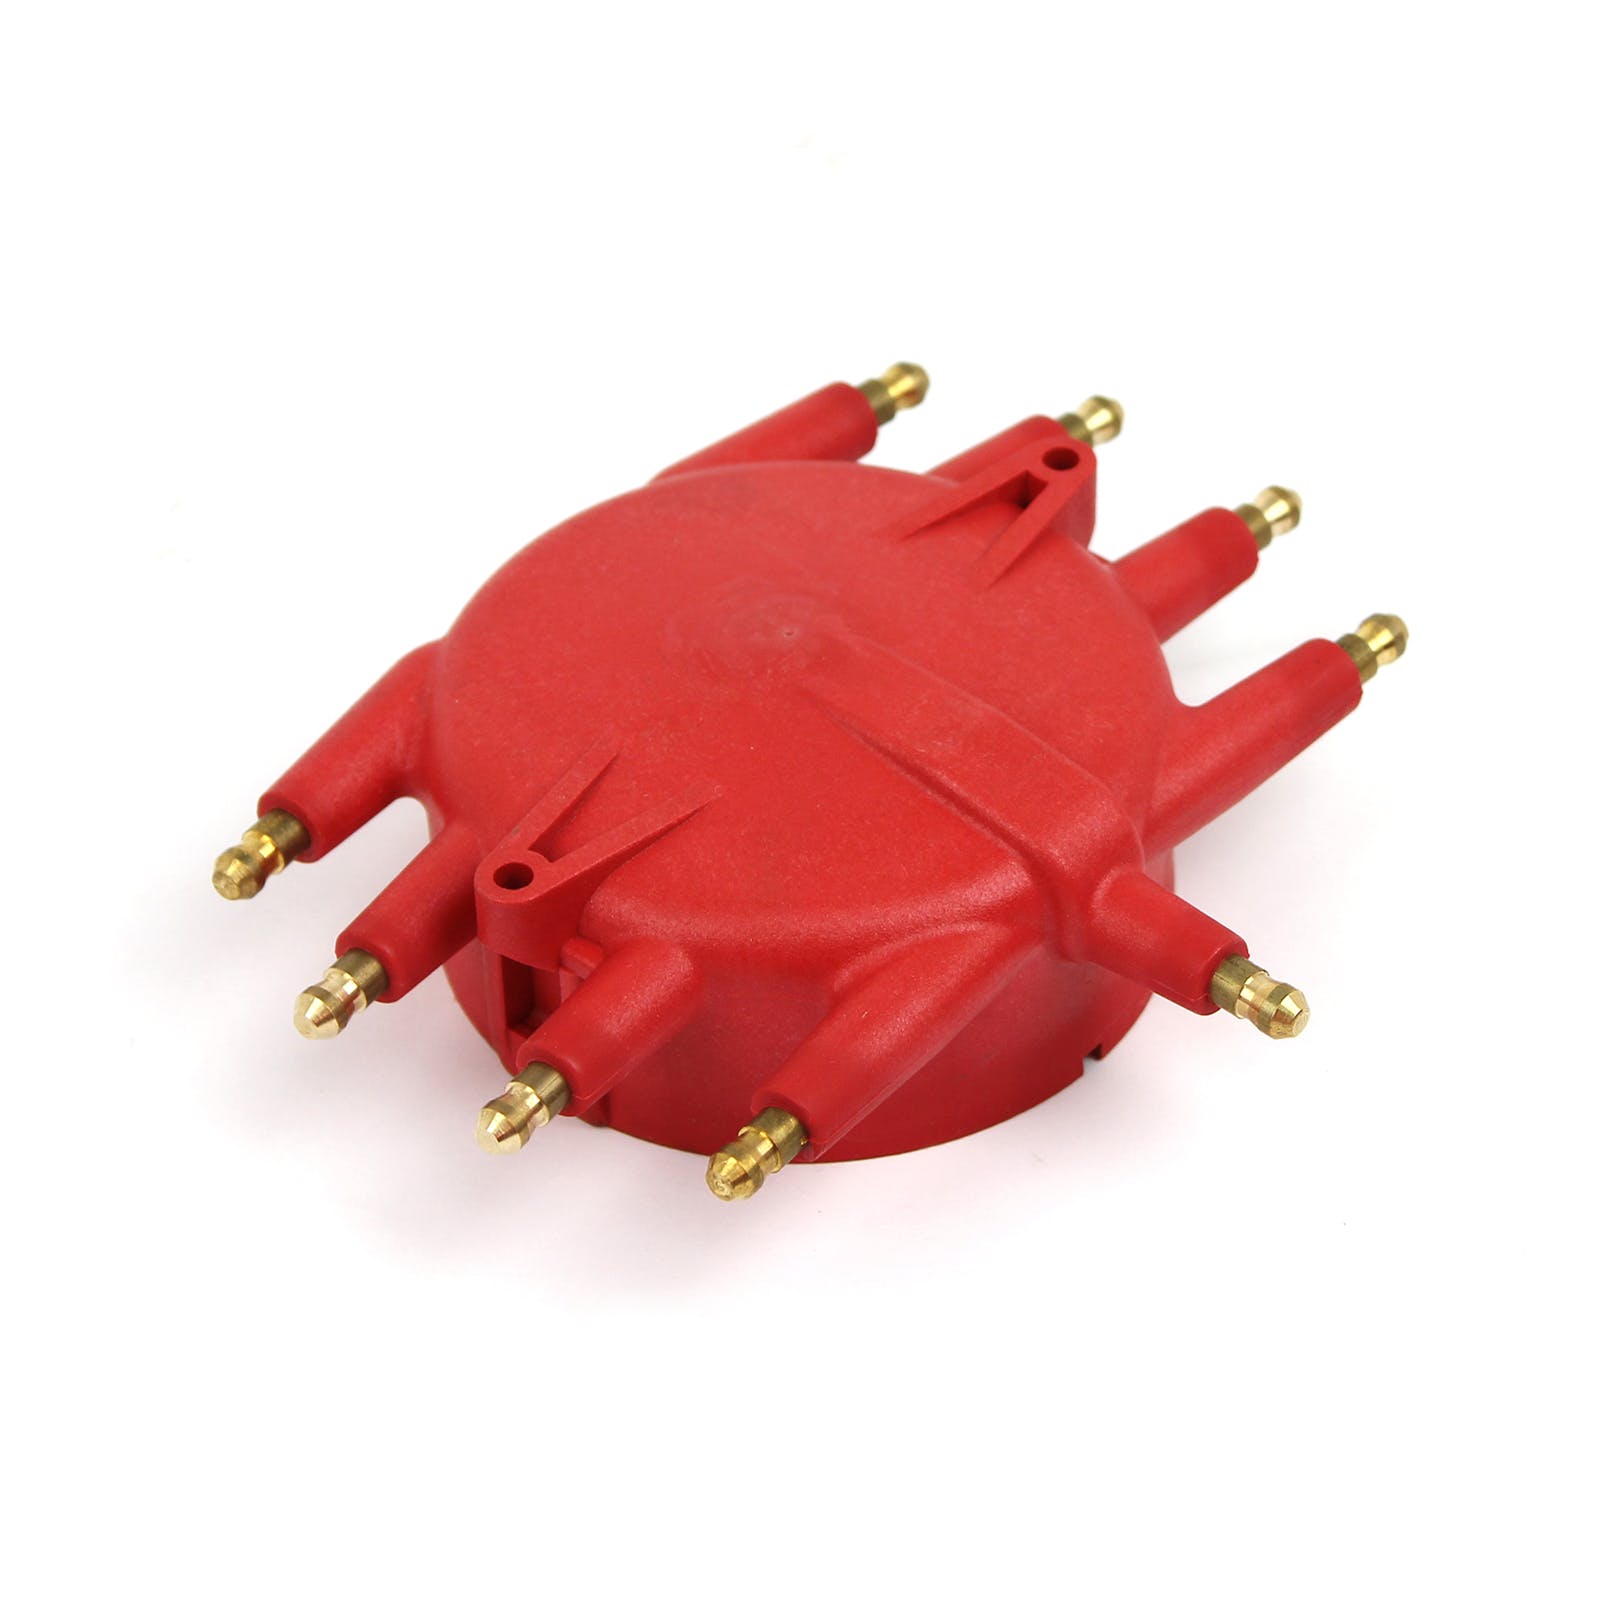 Speedmaster PCE371.1034 Male/HEI Screw-Down Flathead Crab Distributor Cap - Red